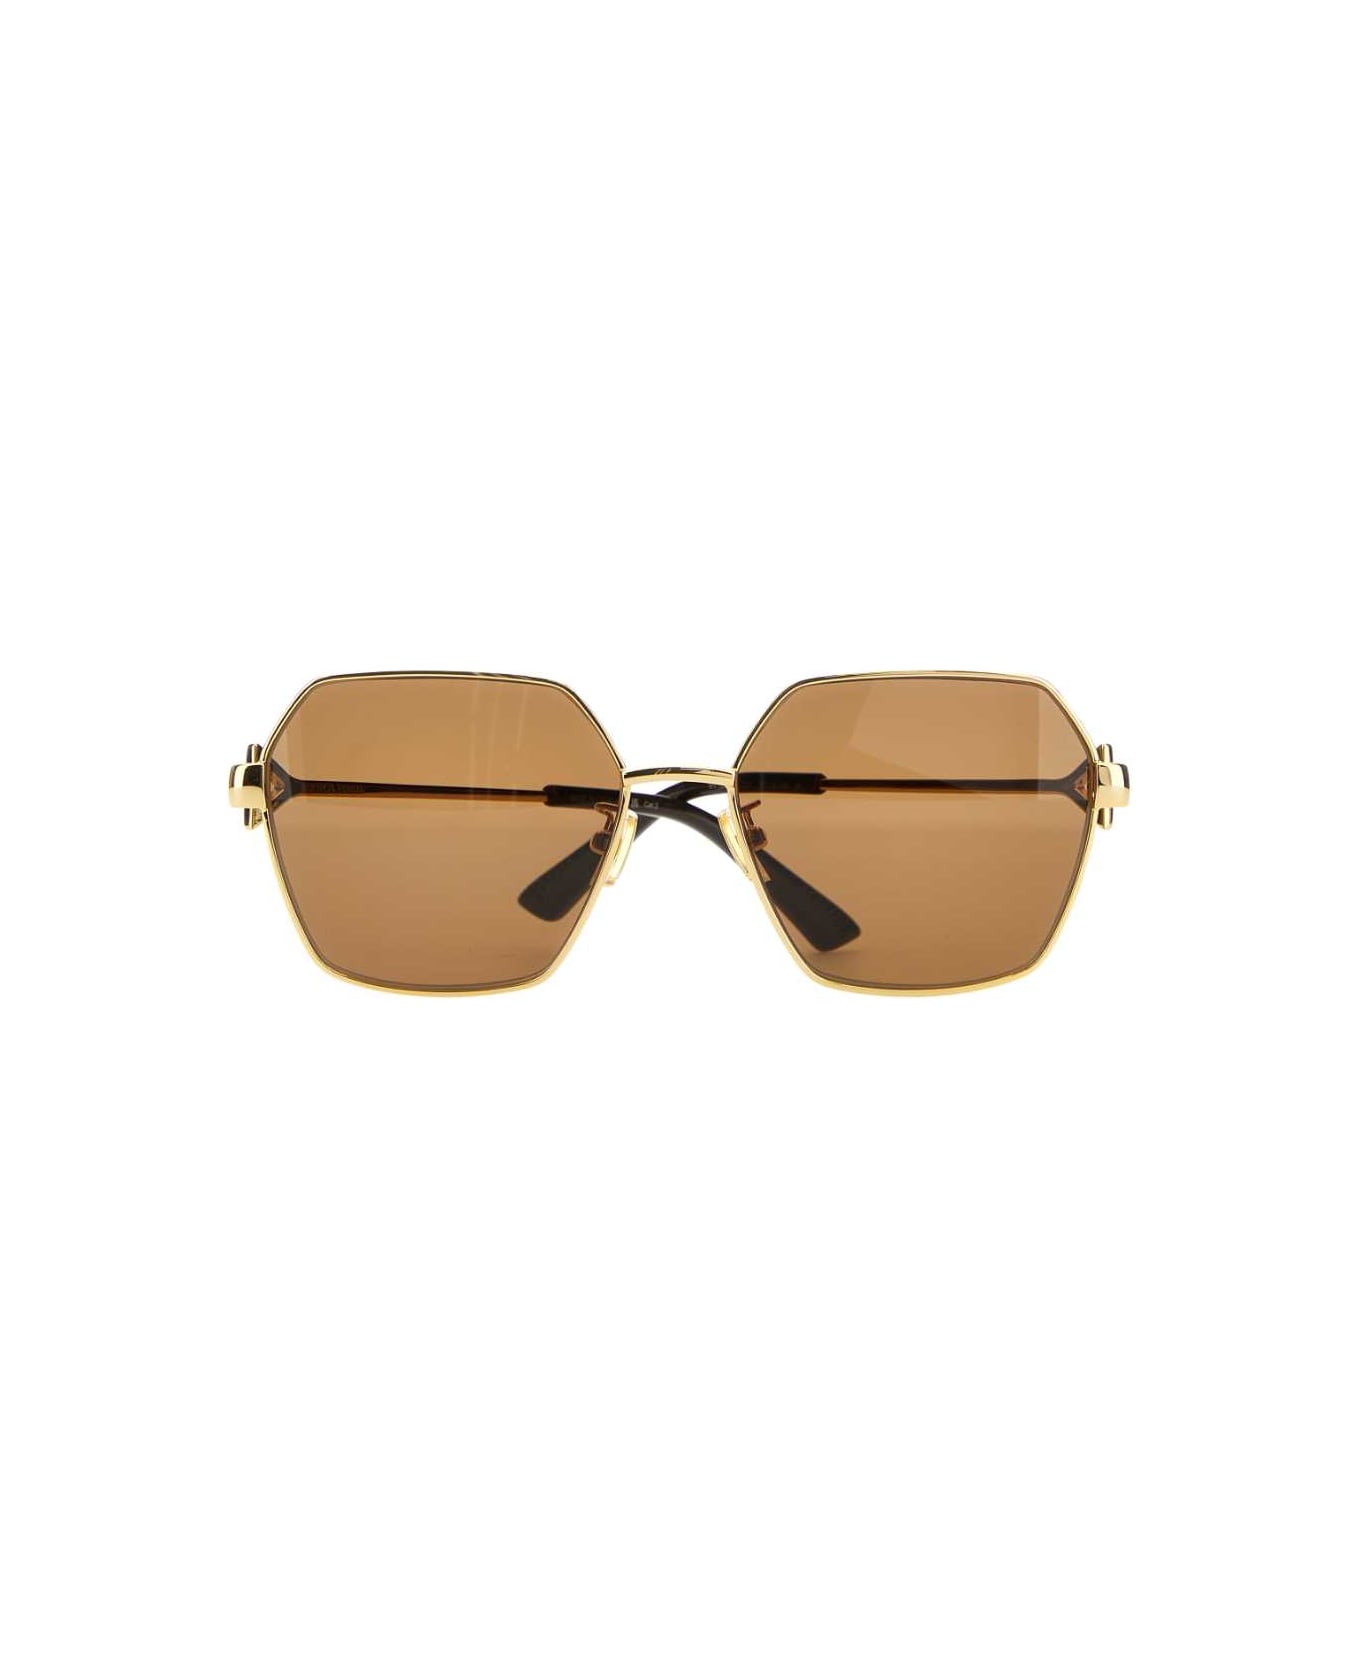 Bottega Veneta Gold Metal Sunglasses - GOLDBROWN